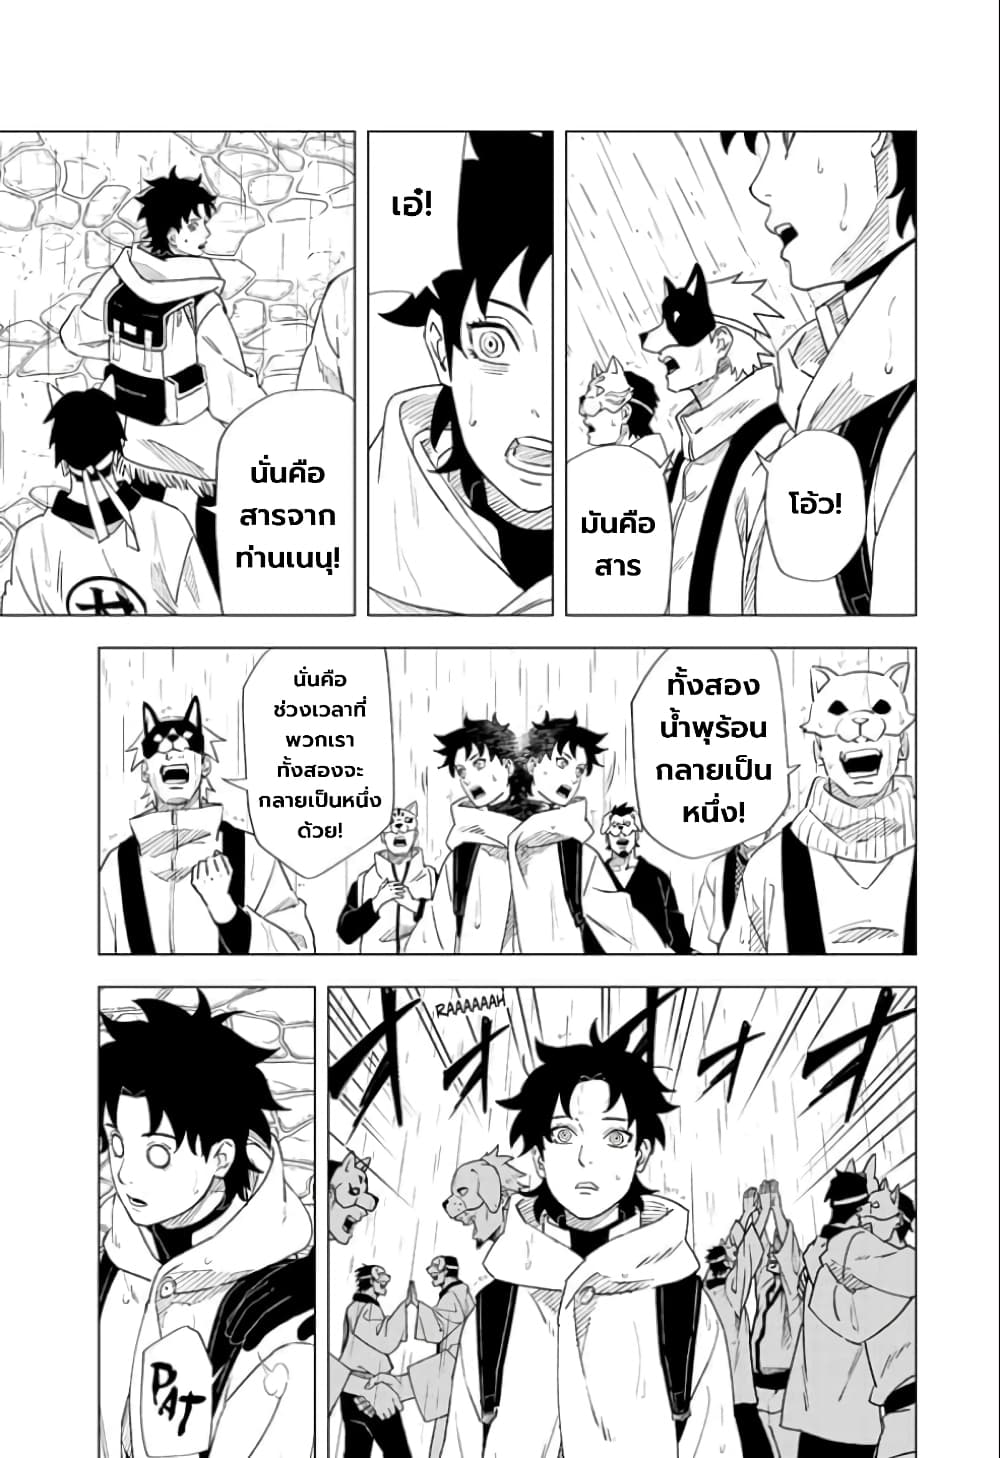 Naruto: Konoha’s Story - The Steam Ninja Scrolls: The Manga ตอนที่ 6